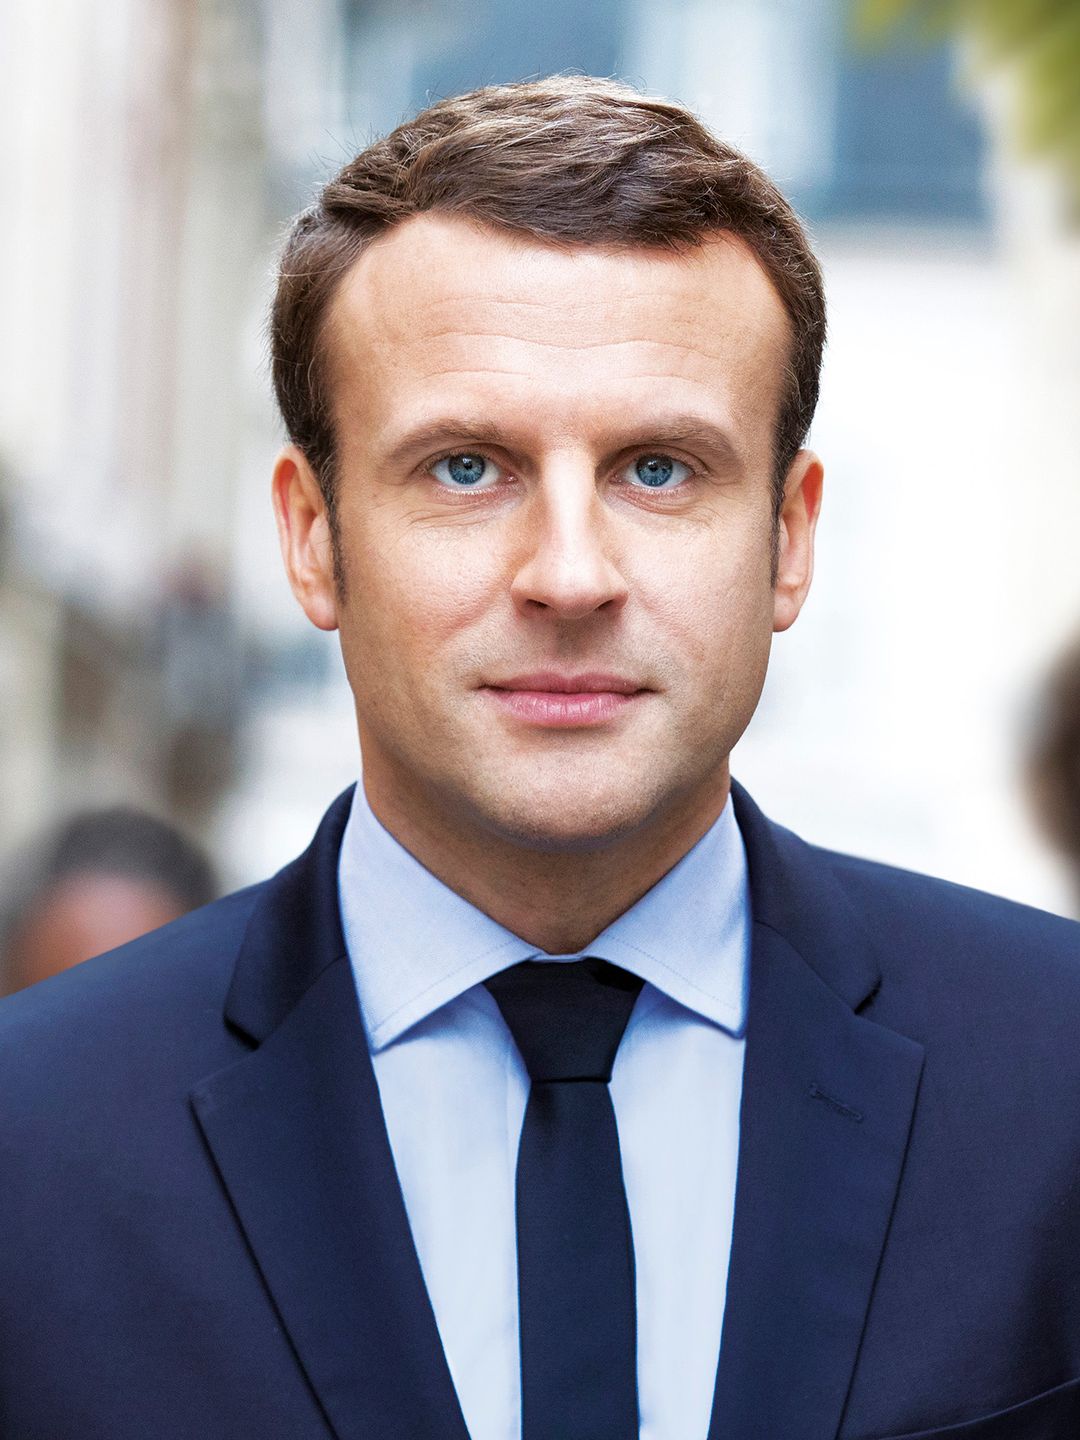 Emmanuel Macron height